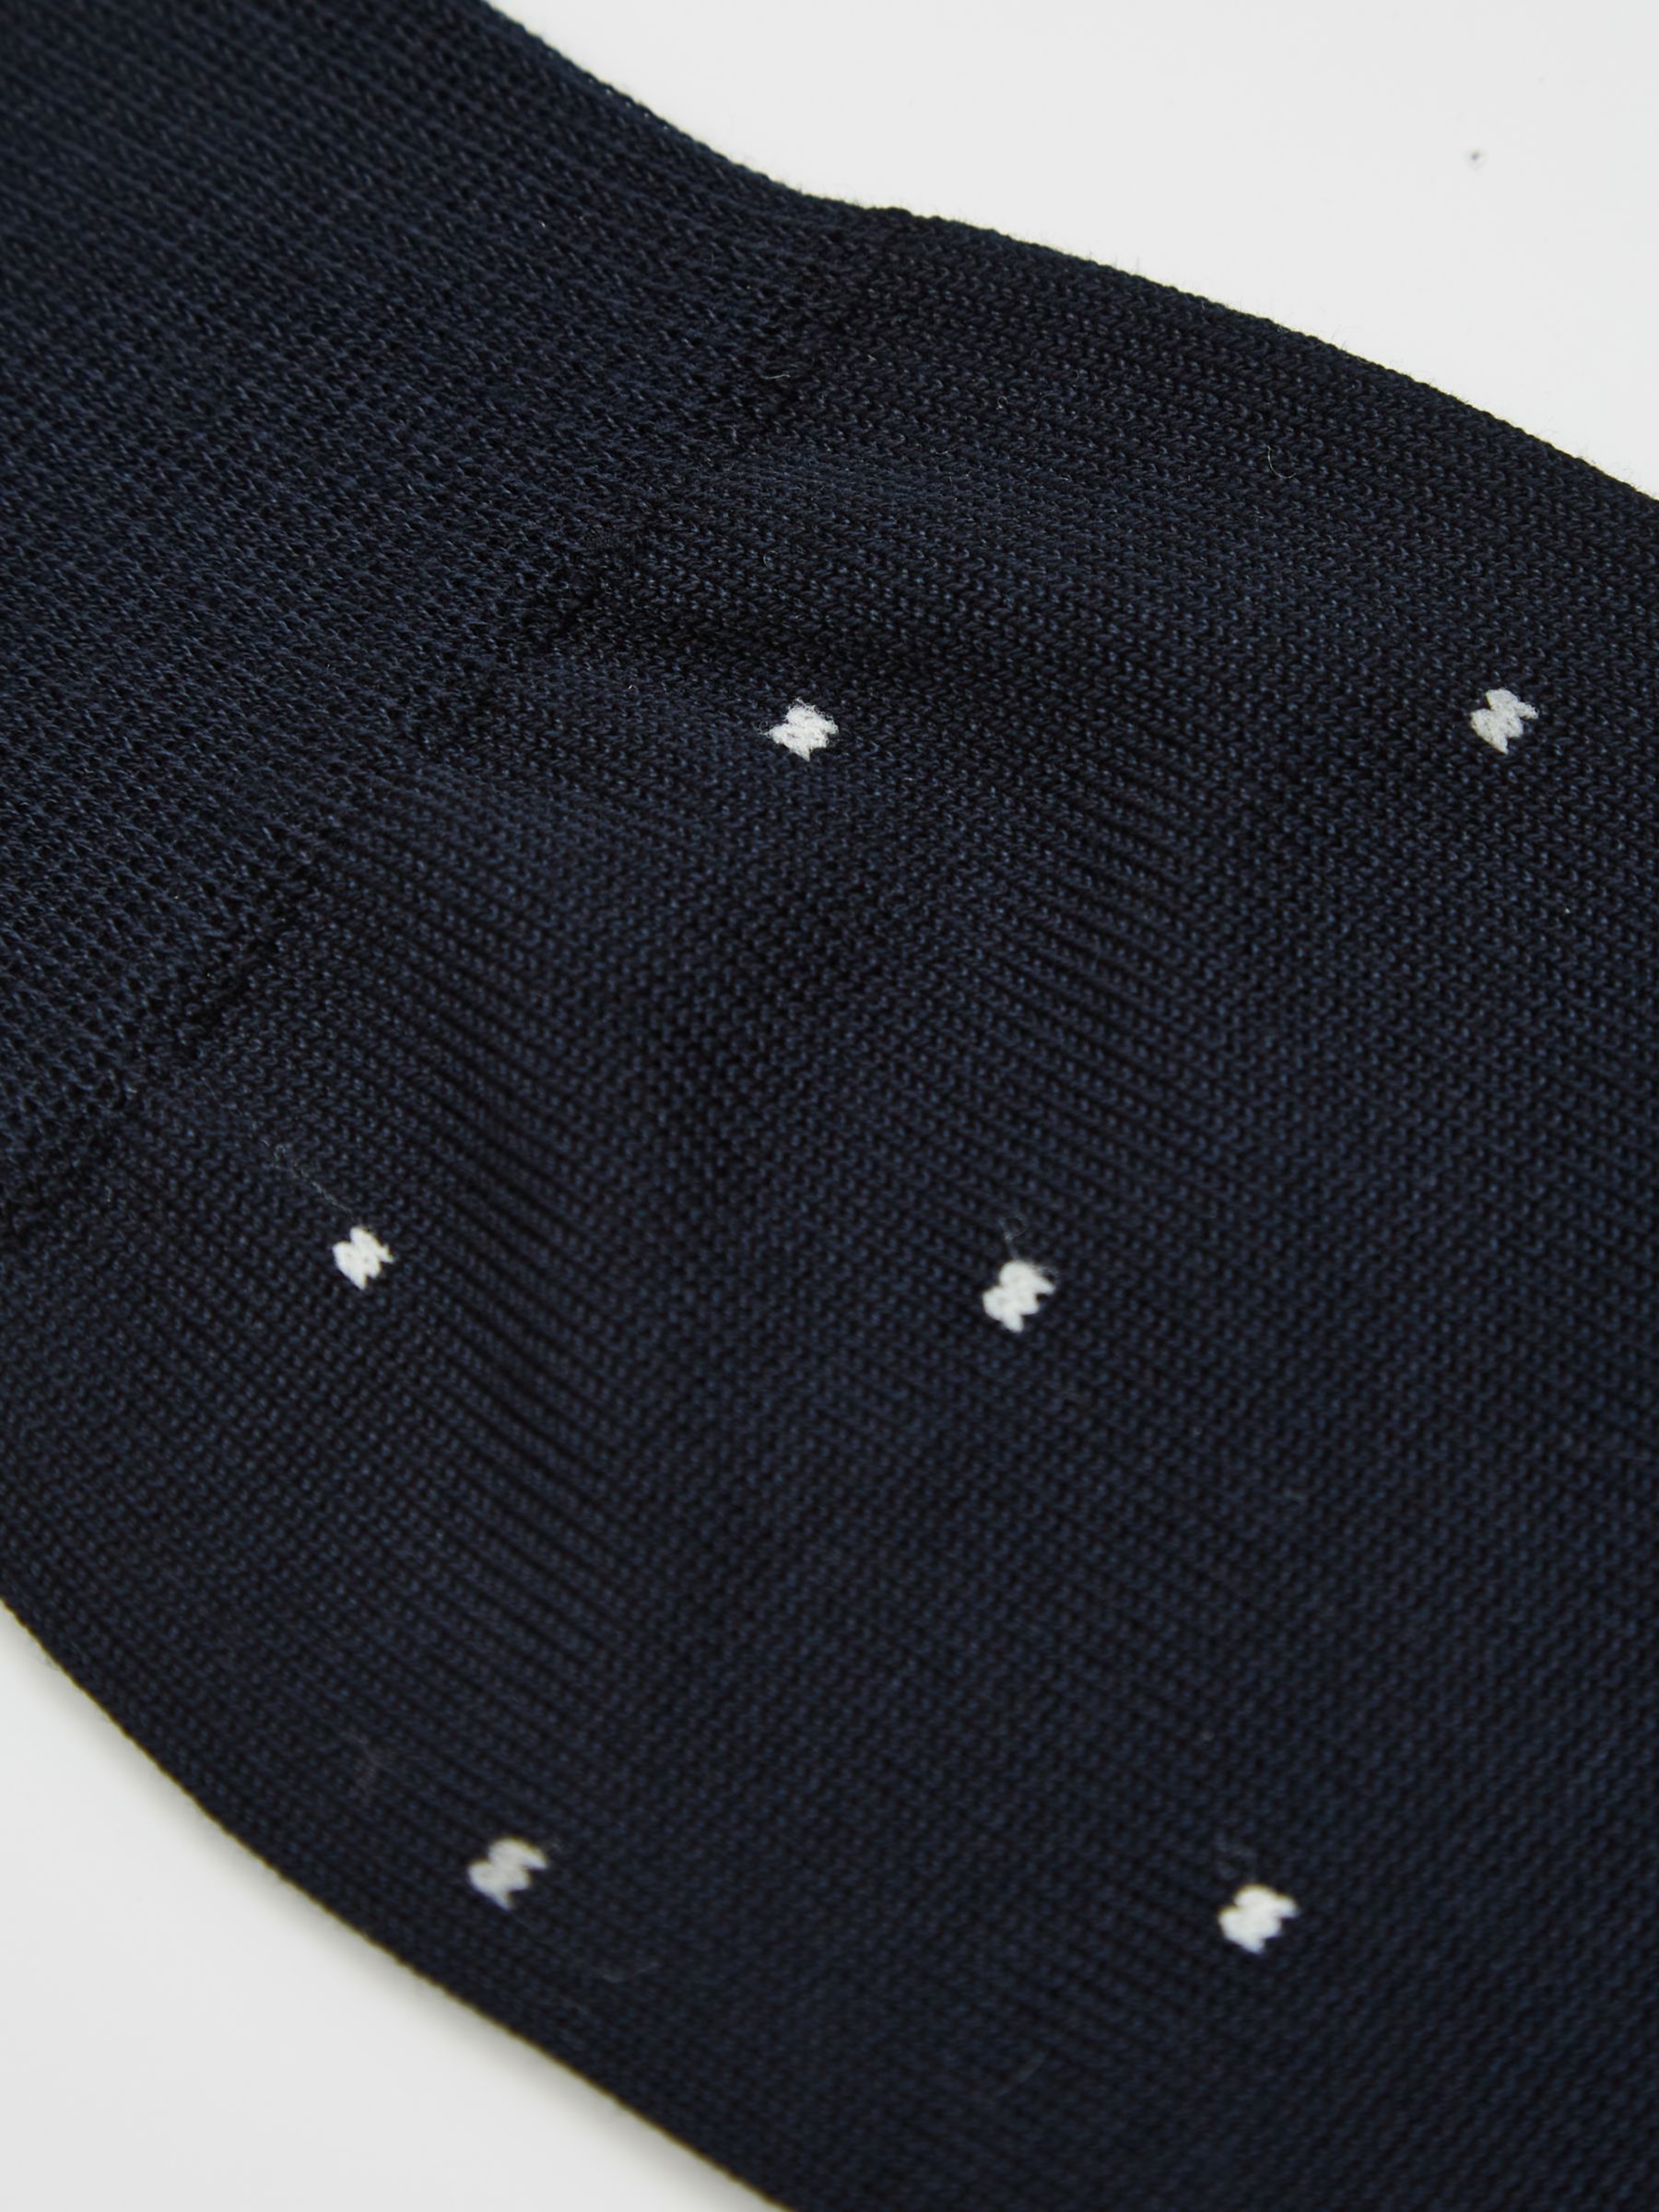 Reiss Mario Polka Dot Print Cotton Blend Socks, Navy, S-M